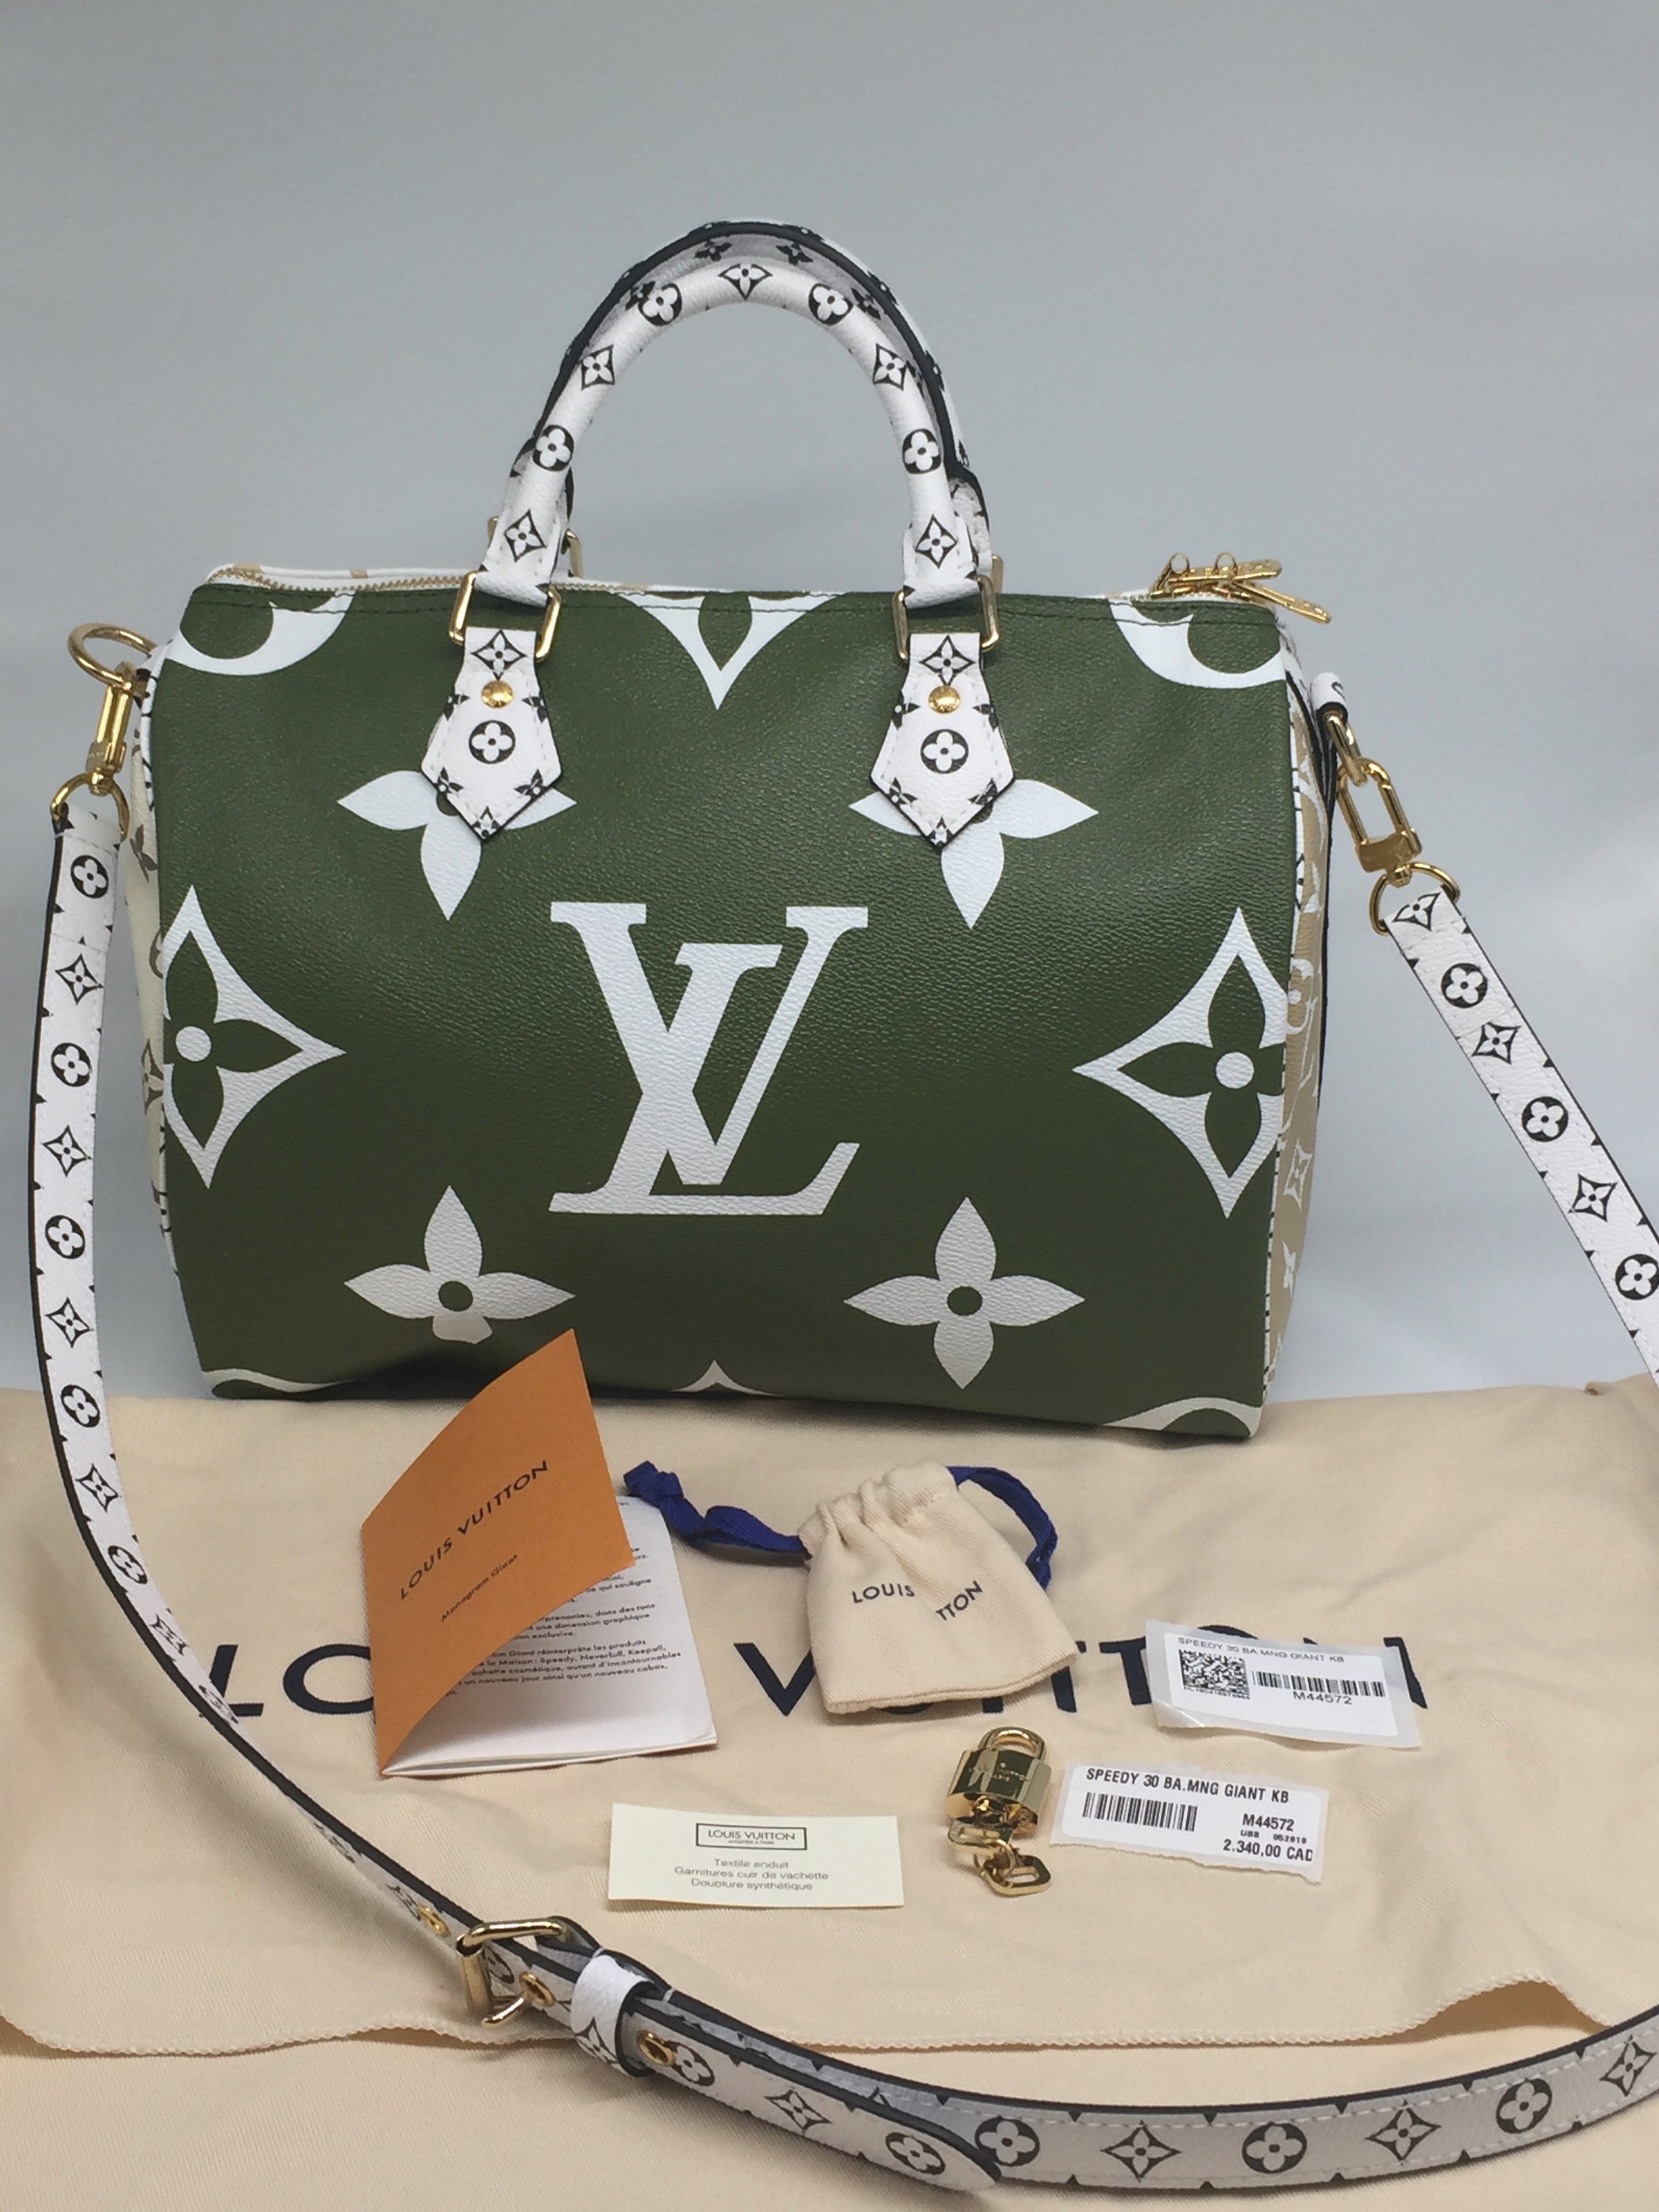 Louis Vuitton Speedy Bandouliere 30 in Monogram Canvas and Vachette - SOLD